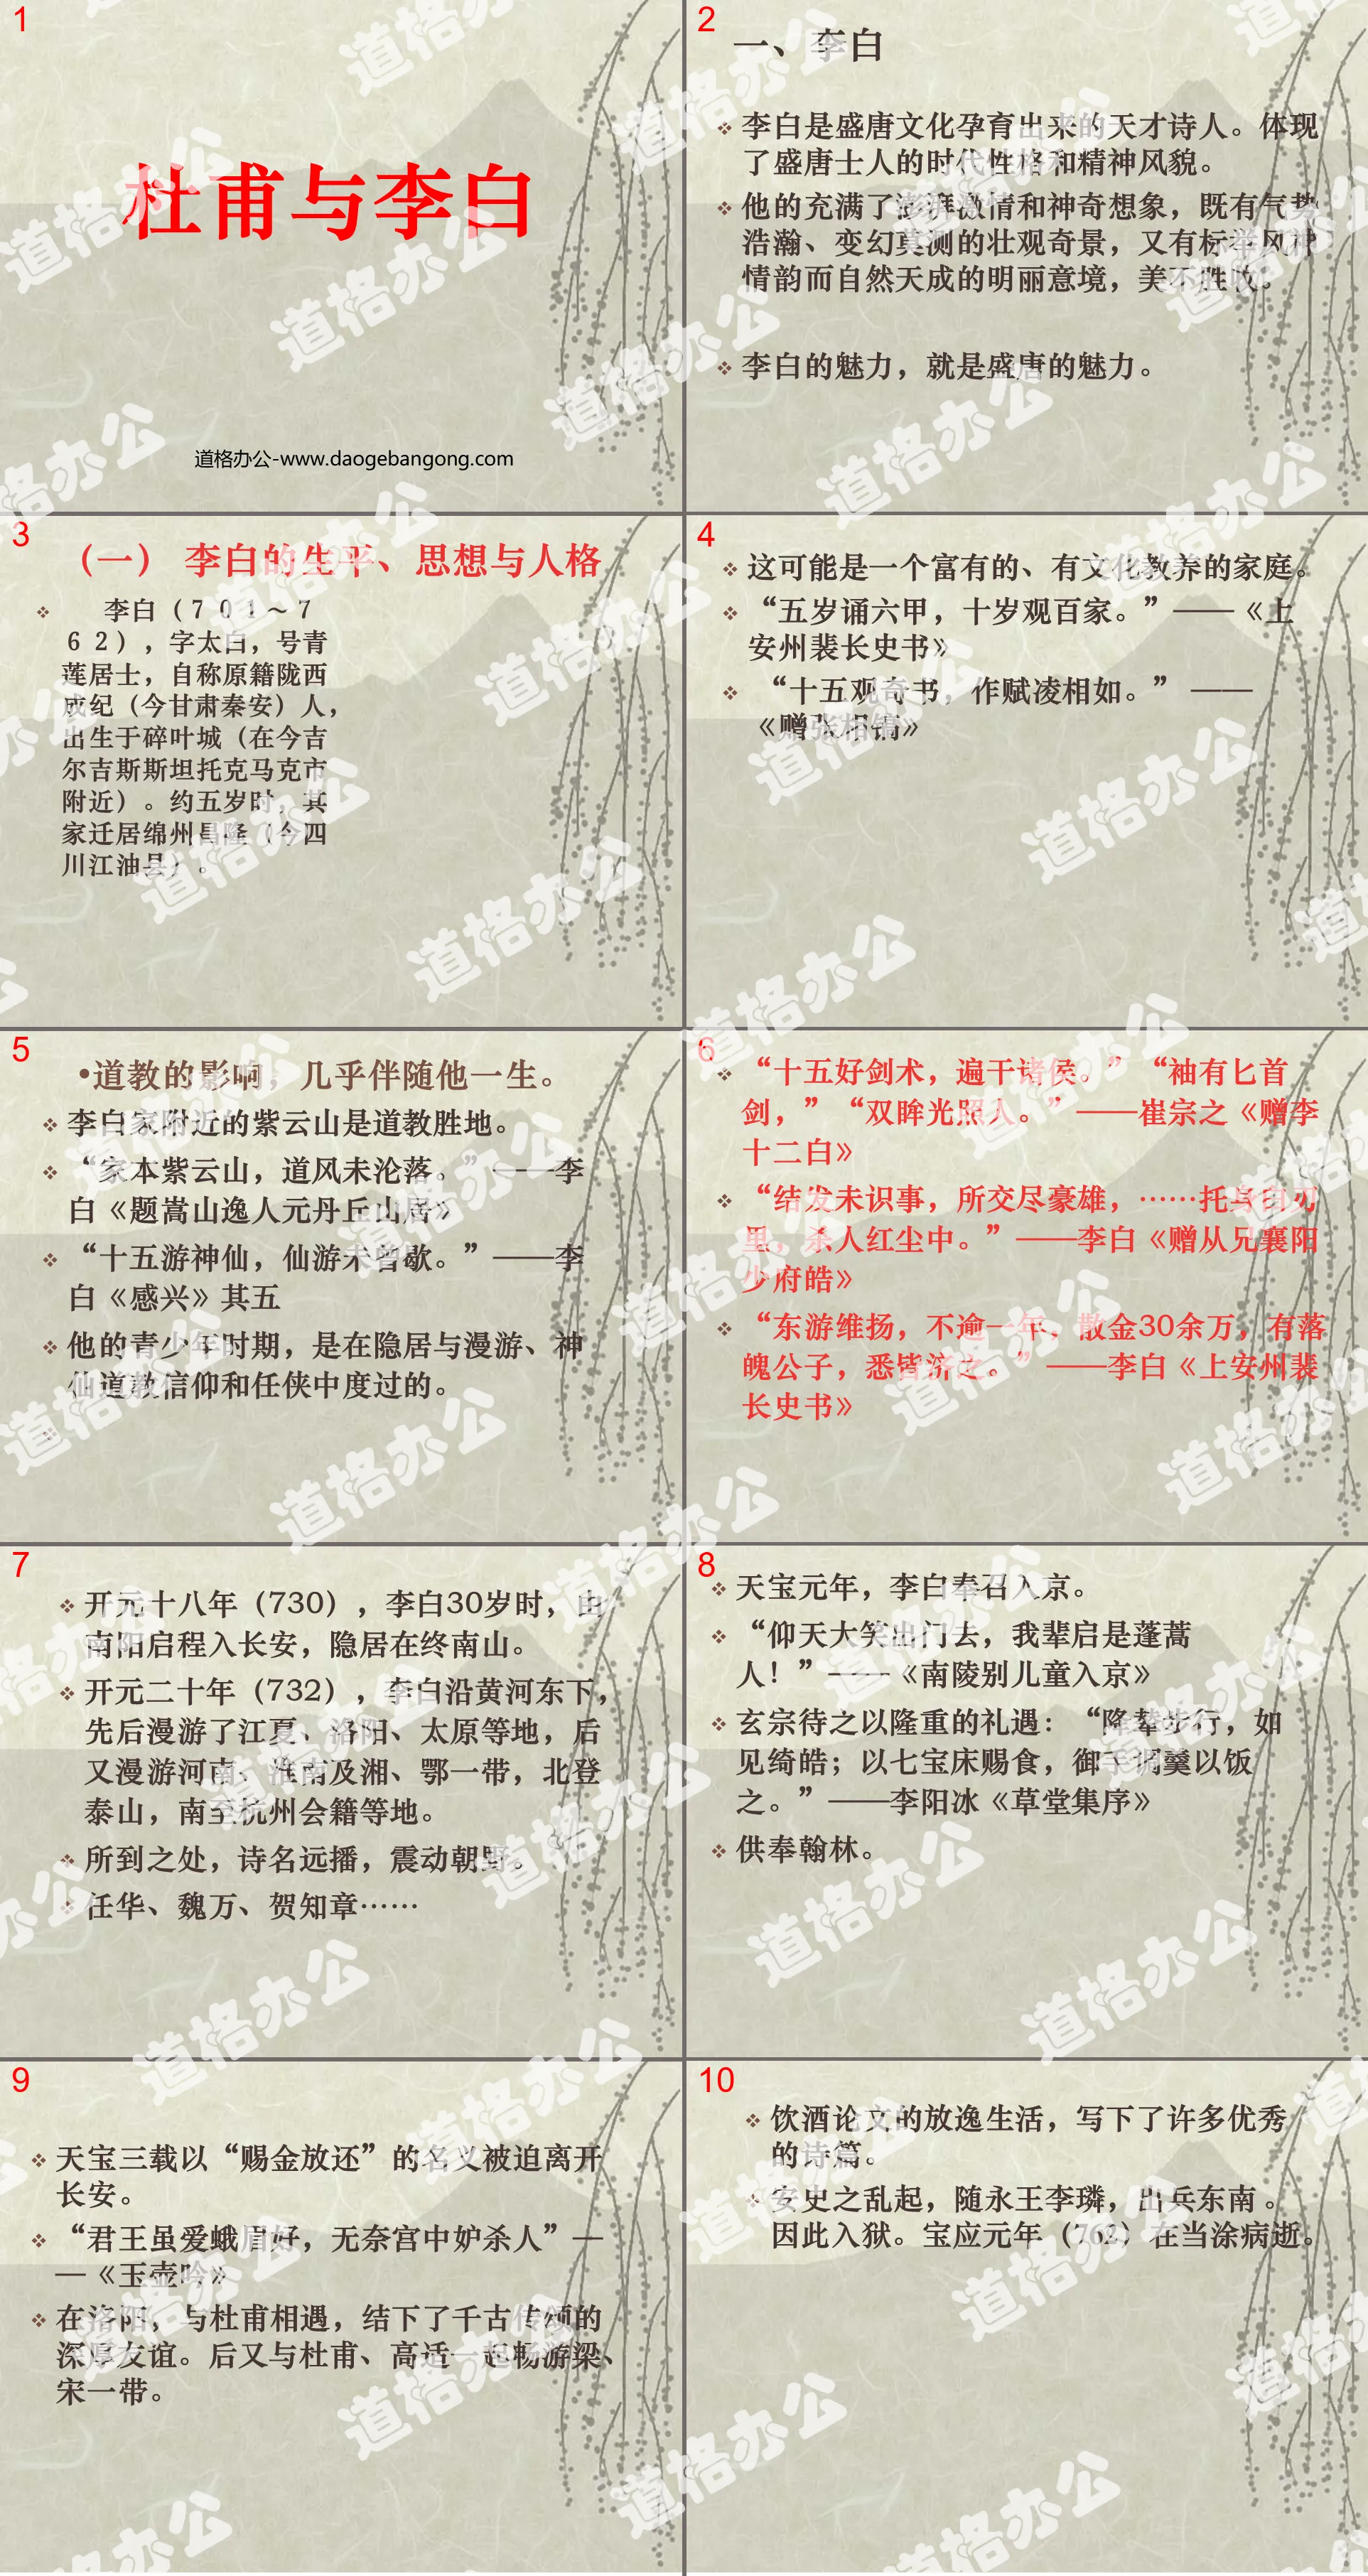 "Du Fu and Li Bai" PPT courseware